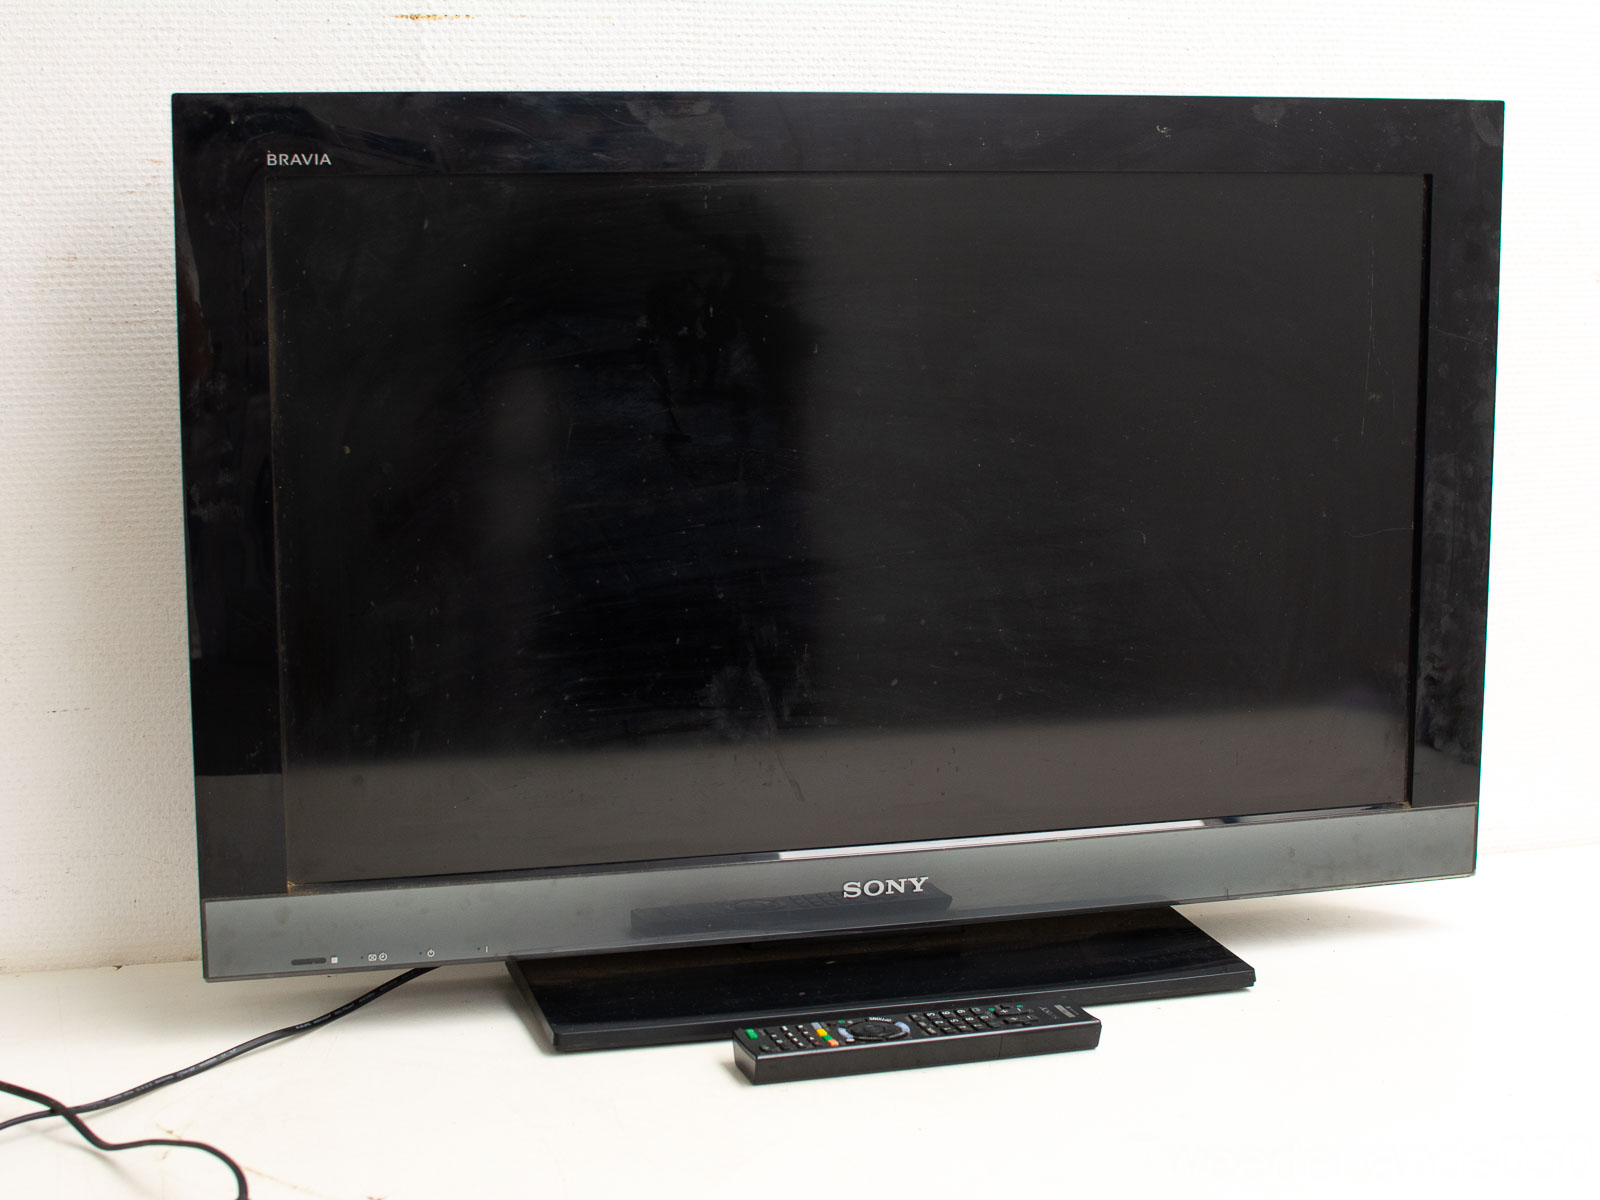 Sony Bravia LCD tv 28372